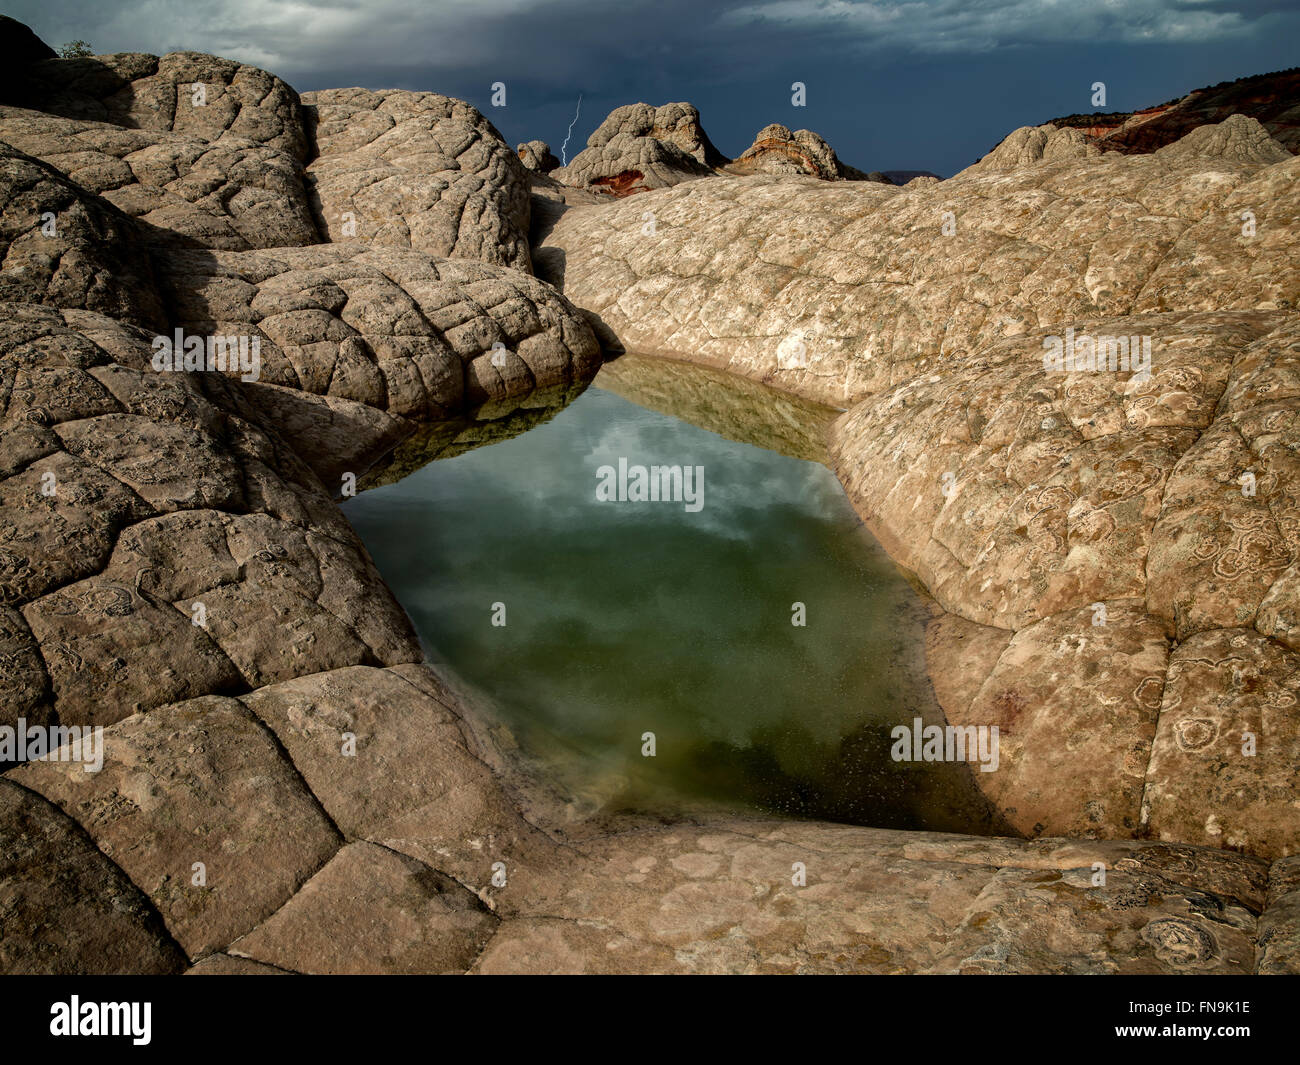 White Pocket with rain water pools. Vermilion Cliffs National Monument, Arizona Stock Photo